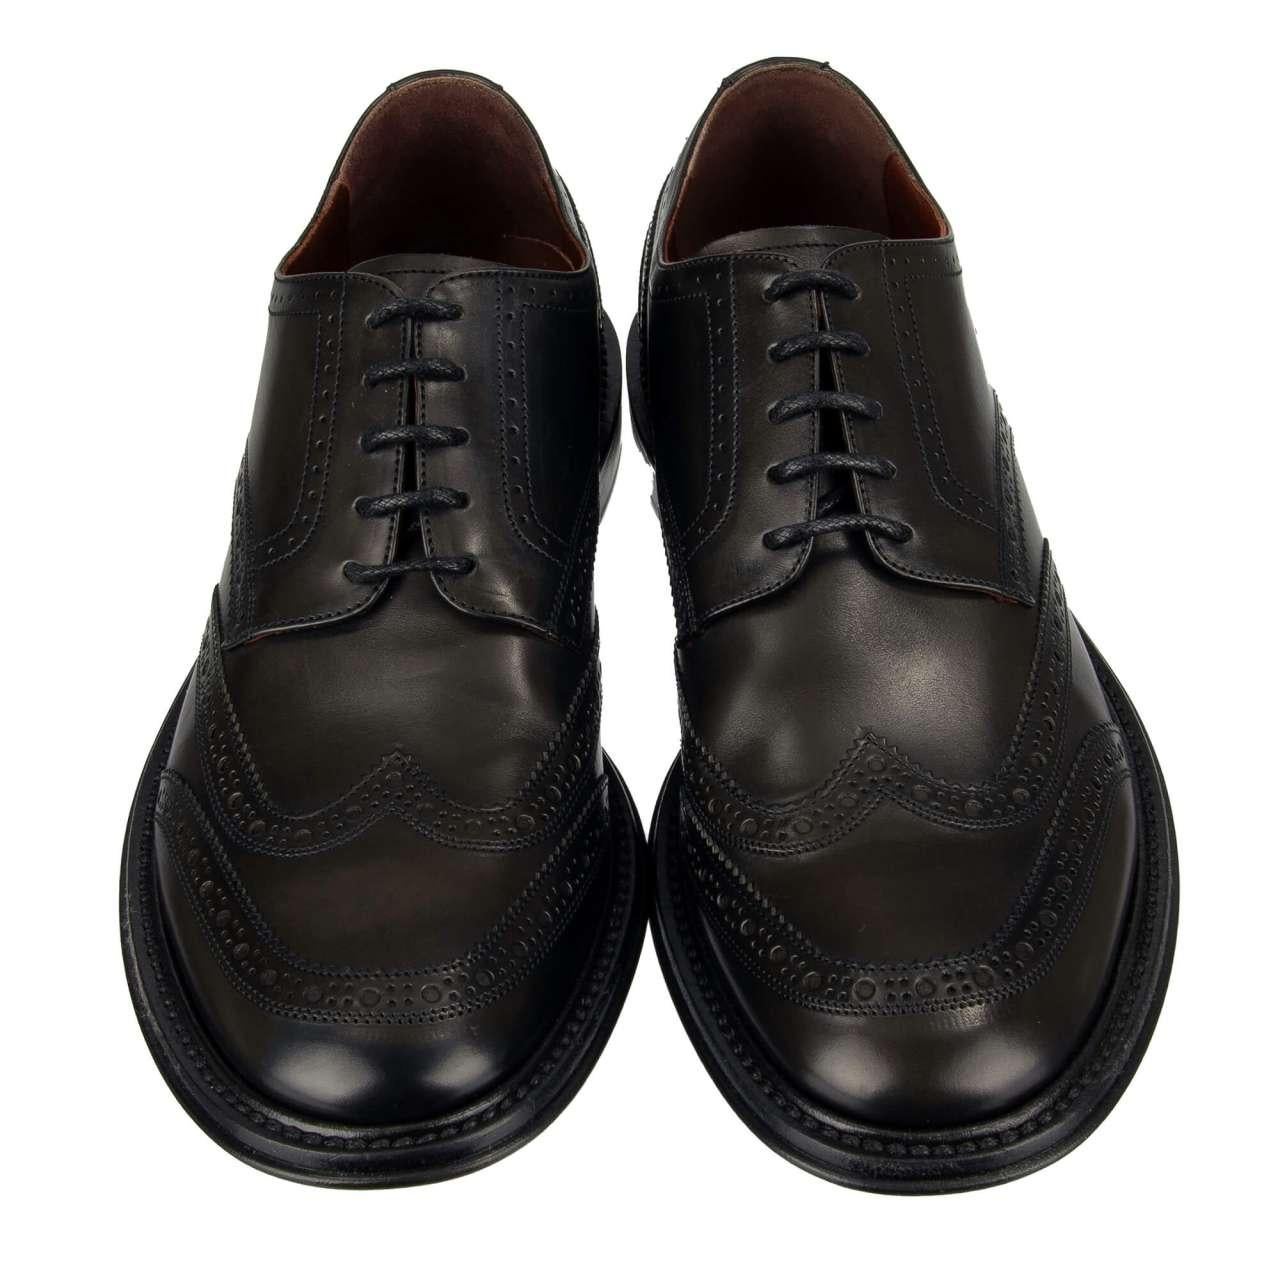 Dolce & Gabbana - DG Logo Formal Calf Leather Derby Shoes MARSALA Black EUR 41.5 In Excellent Condition For Sale In Erkrath, DE